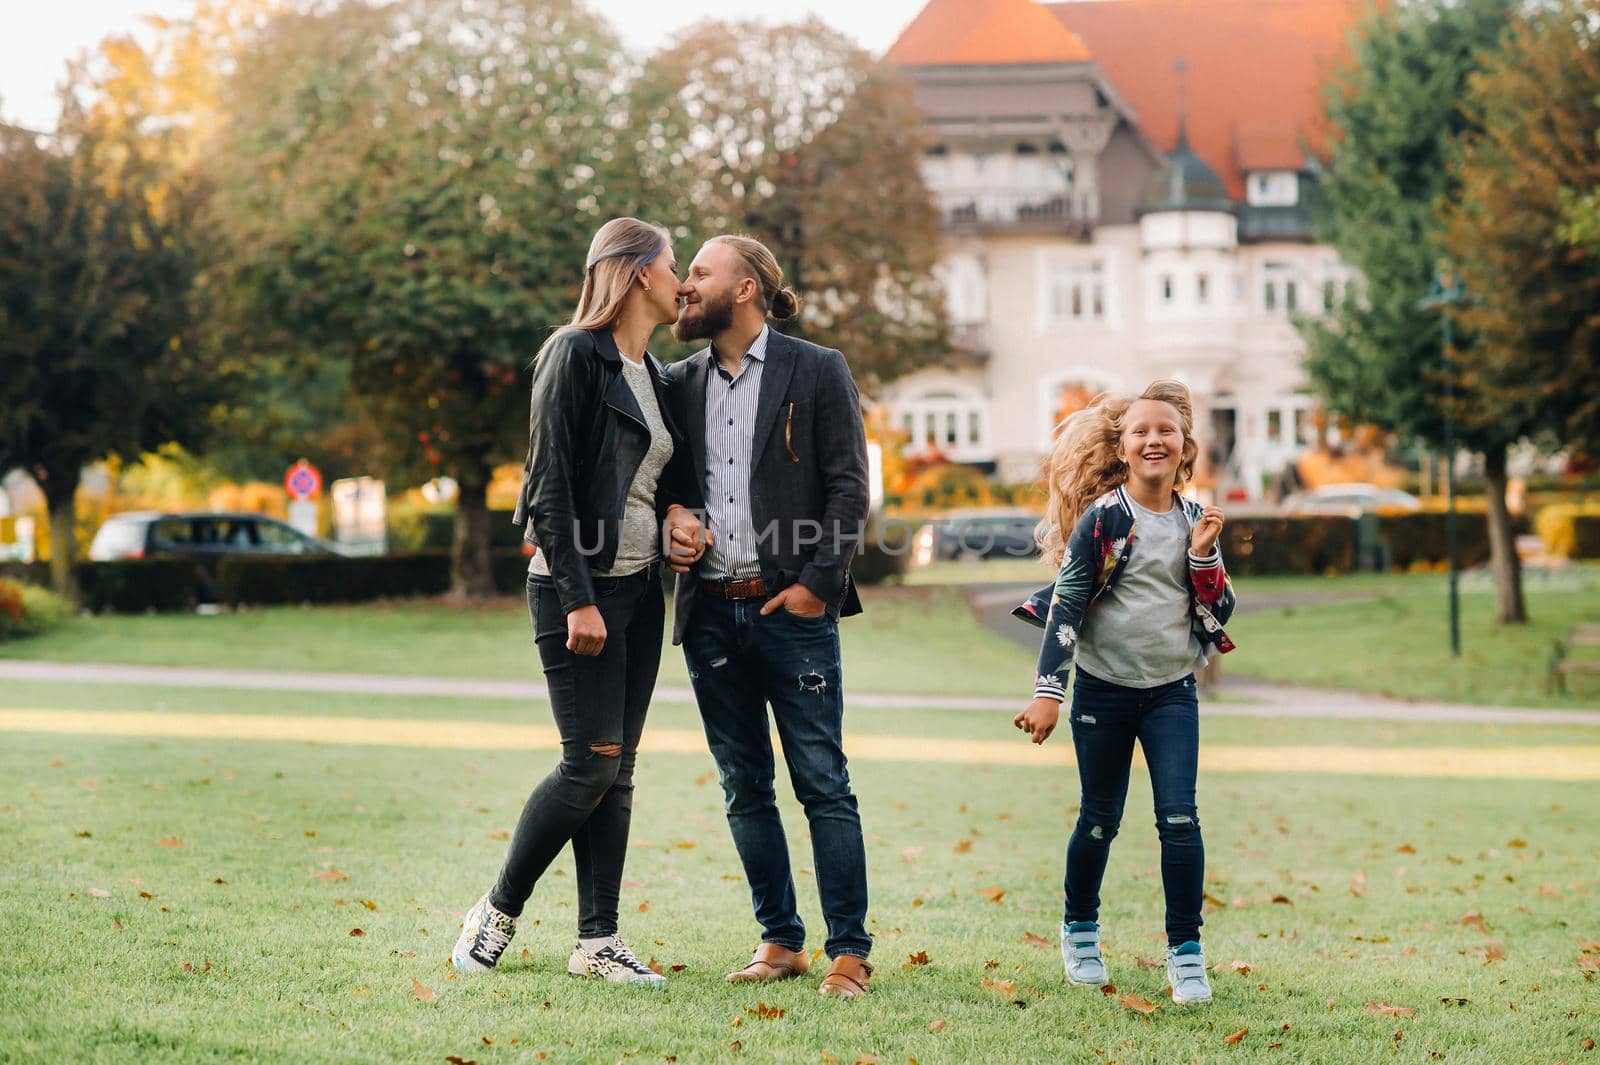 A happy family of three runs through the grass in Austria's old town.A family walks through a small town in Austria.Europe.Velden am werten Zee by Lobachad